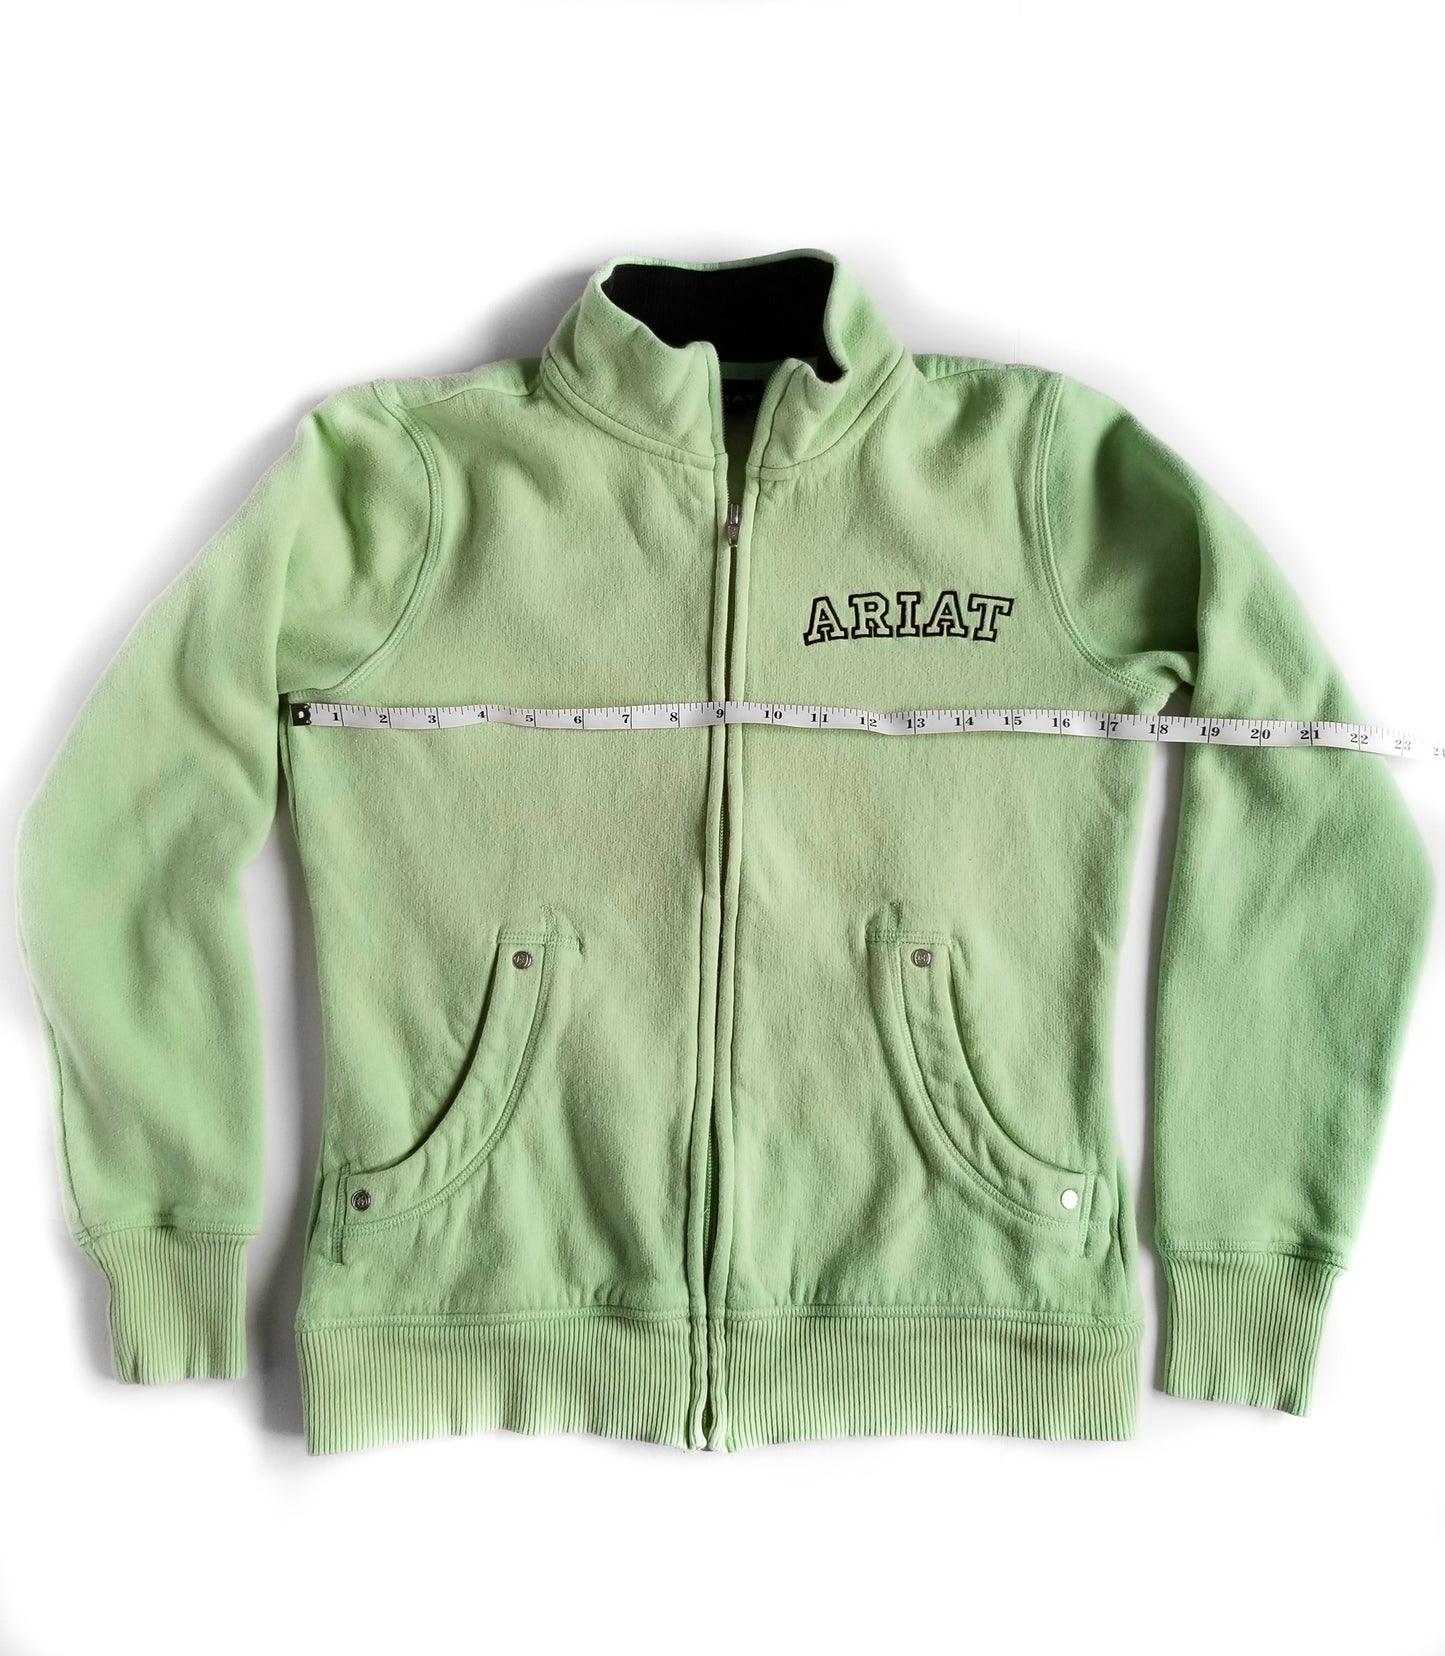 Ariat Full Zip Sweater - Light Lime Green - Women's Small